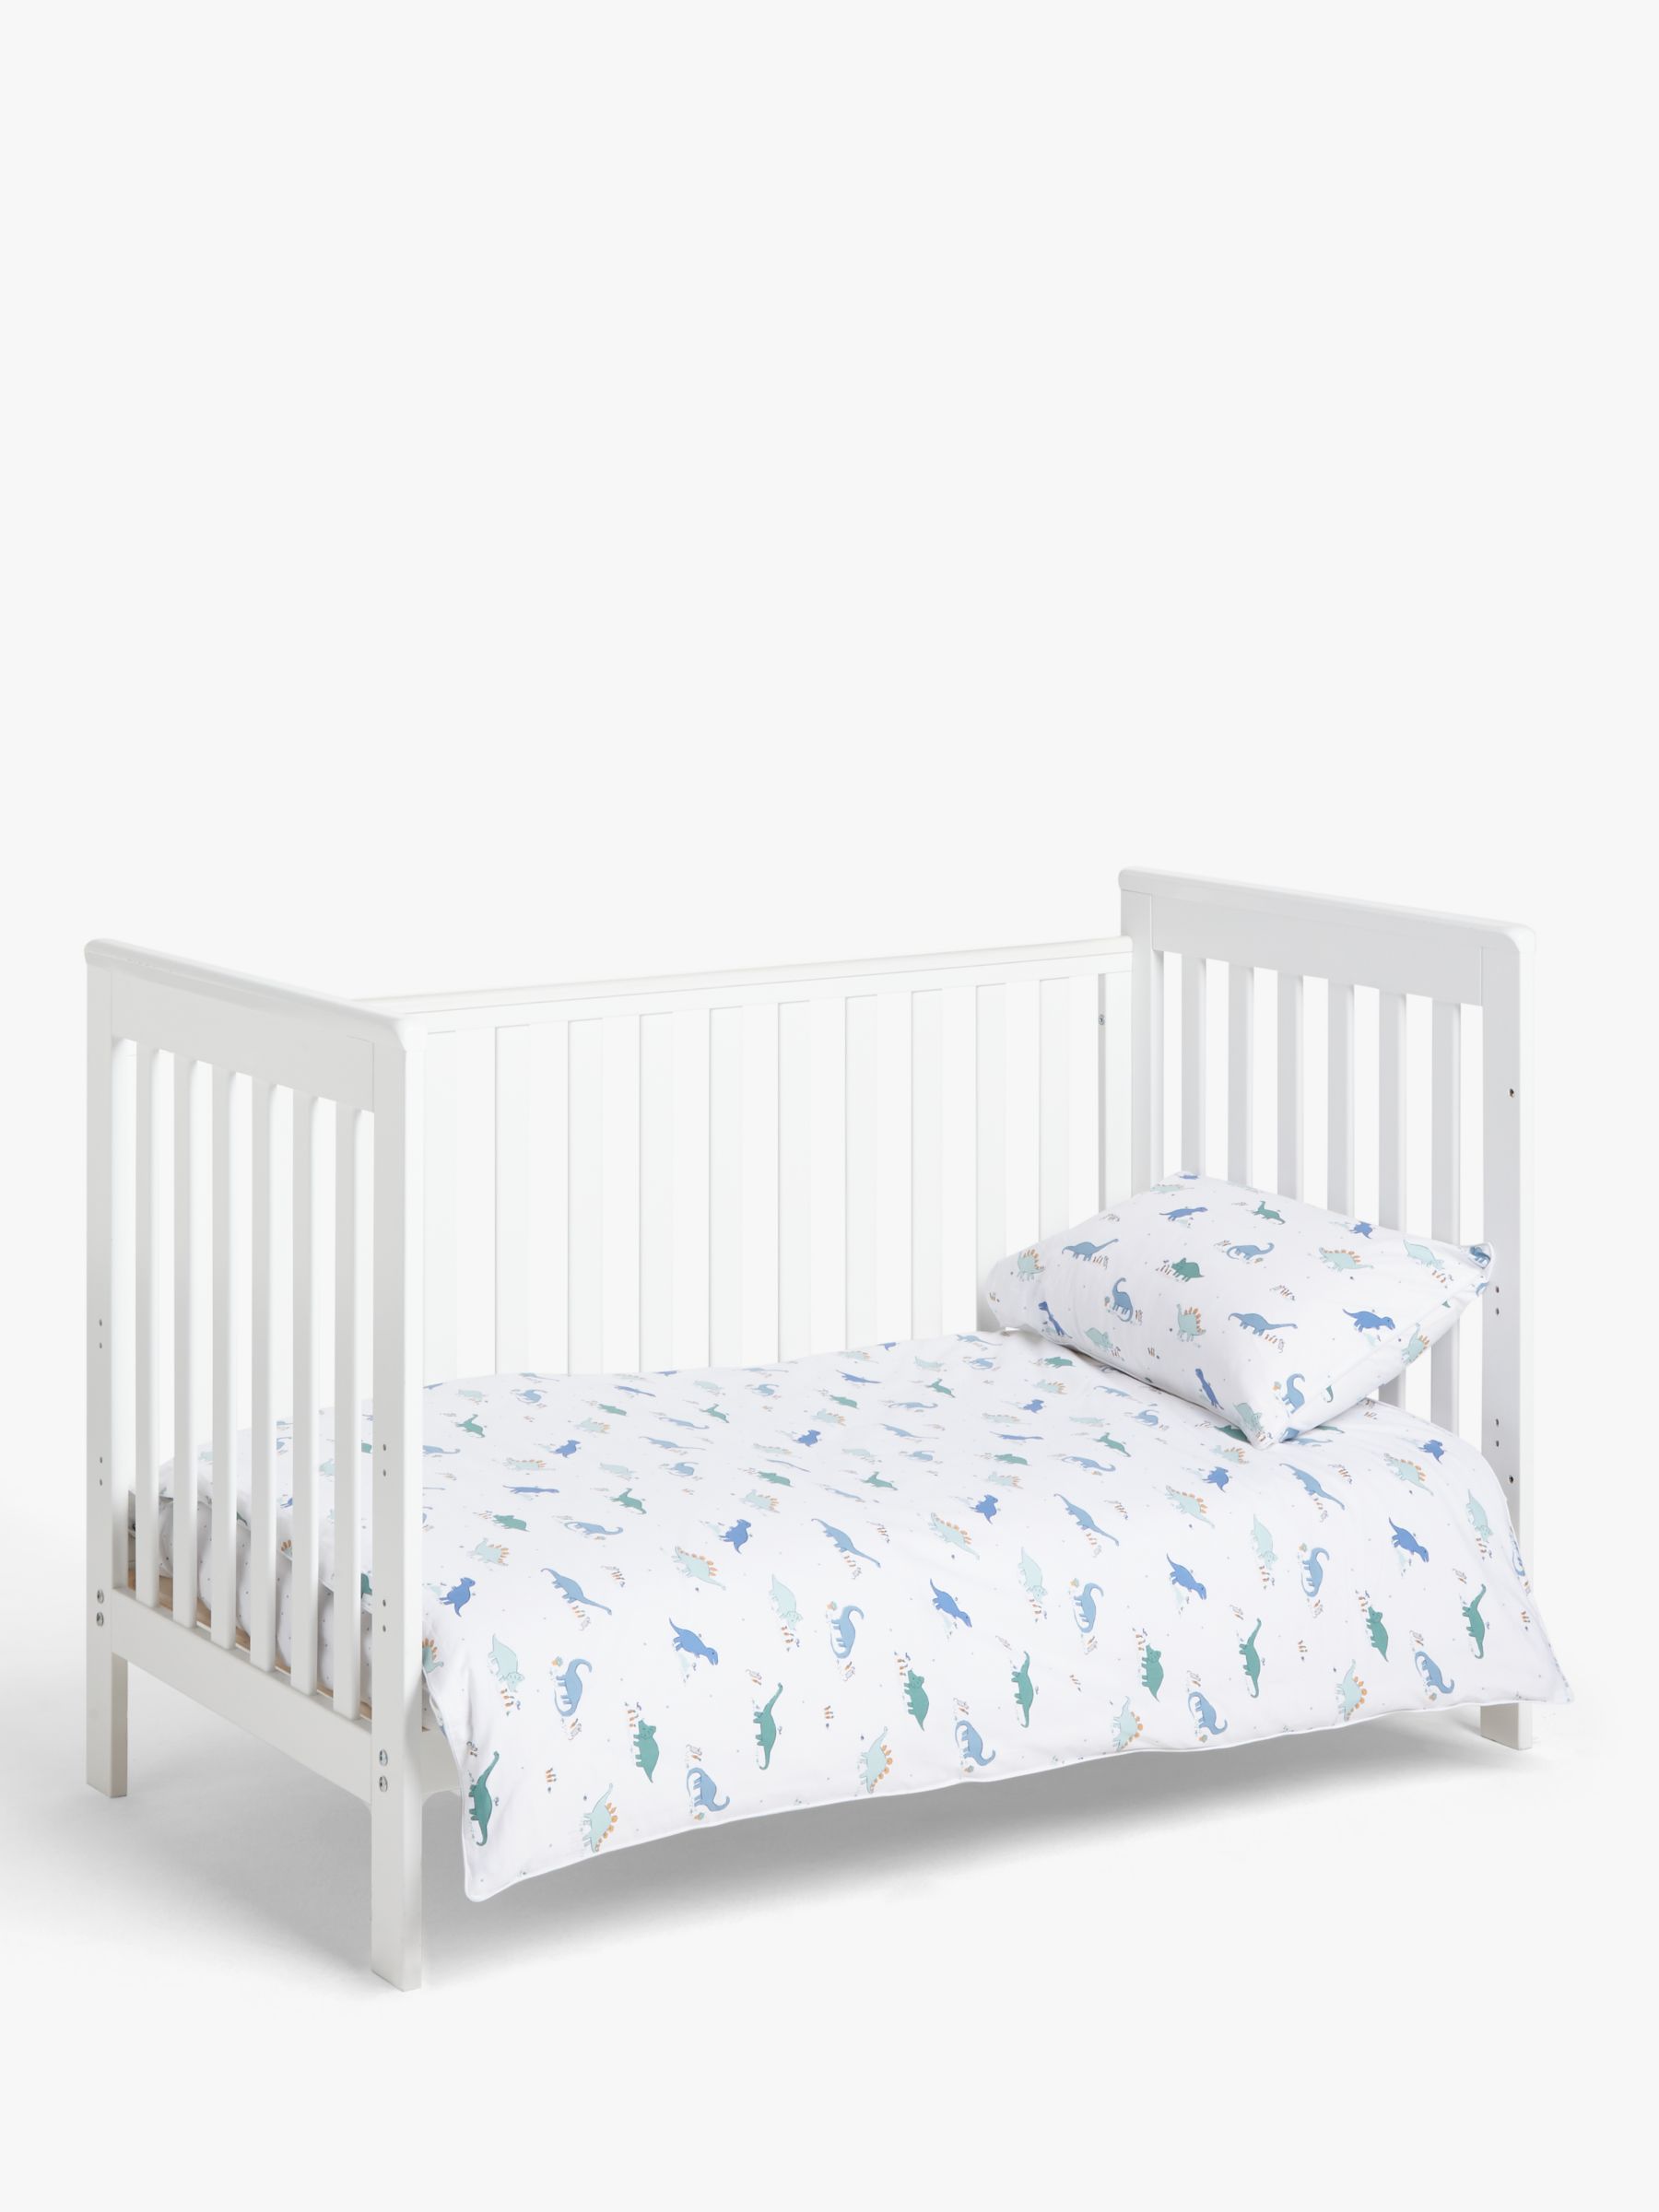 dinosaur cot bed bedding set